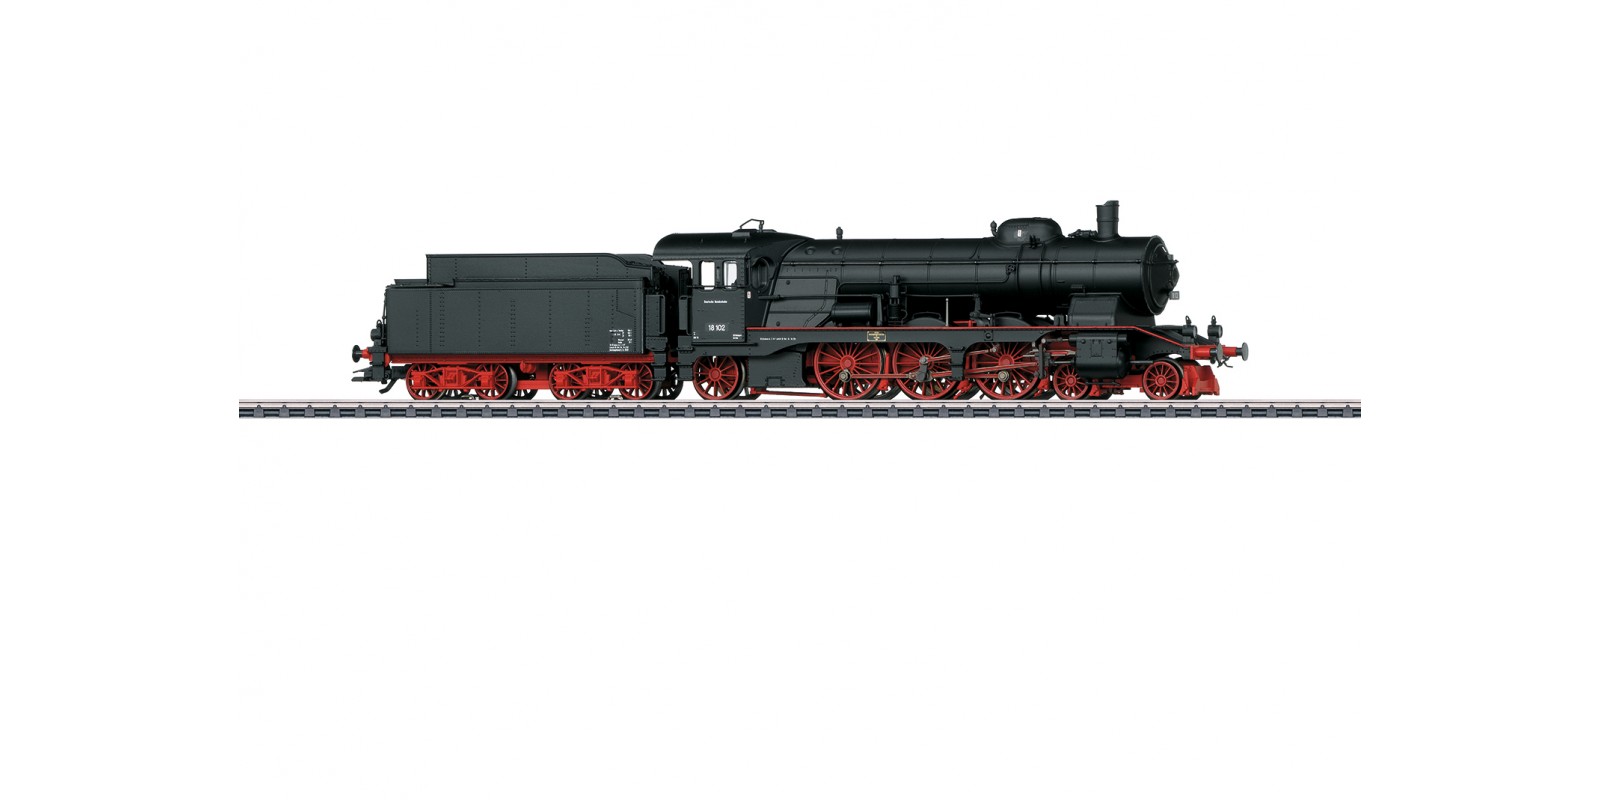 37119 Class 18.1 Steam Locomotive